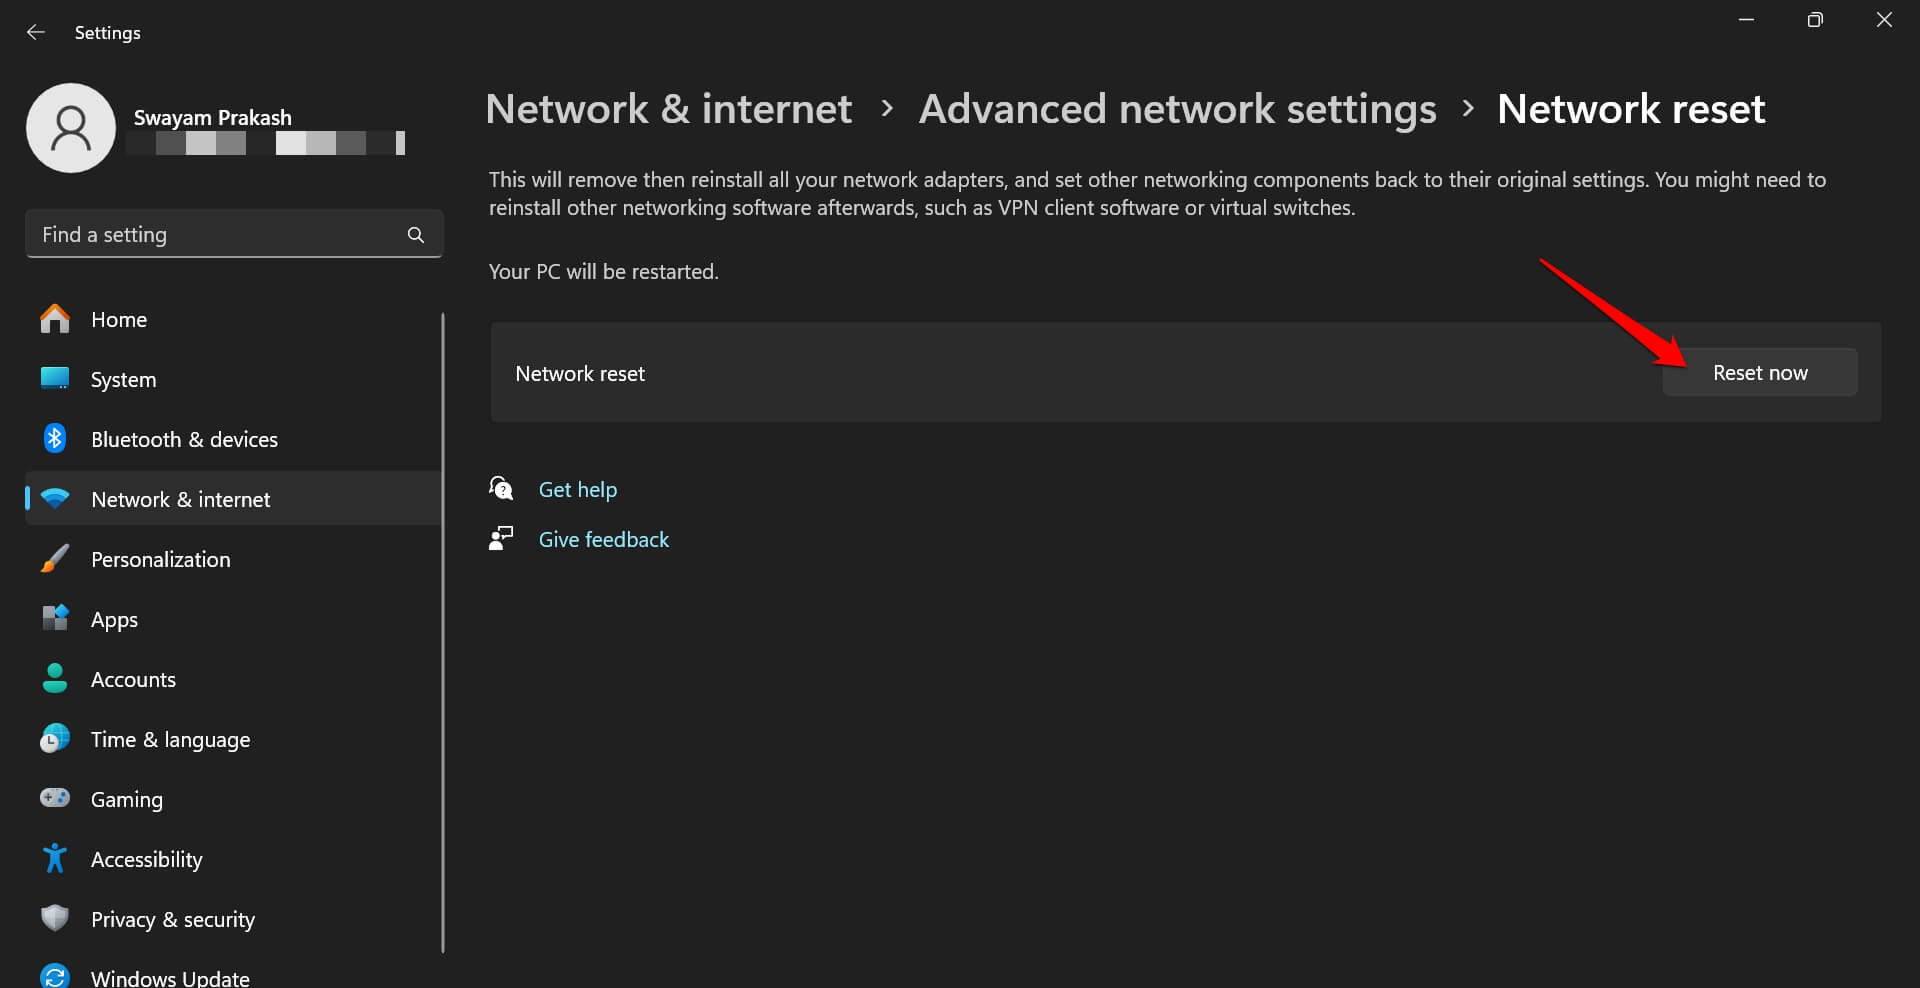 reset network now